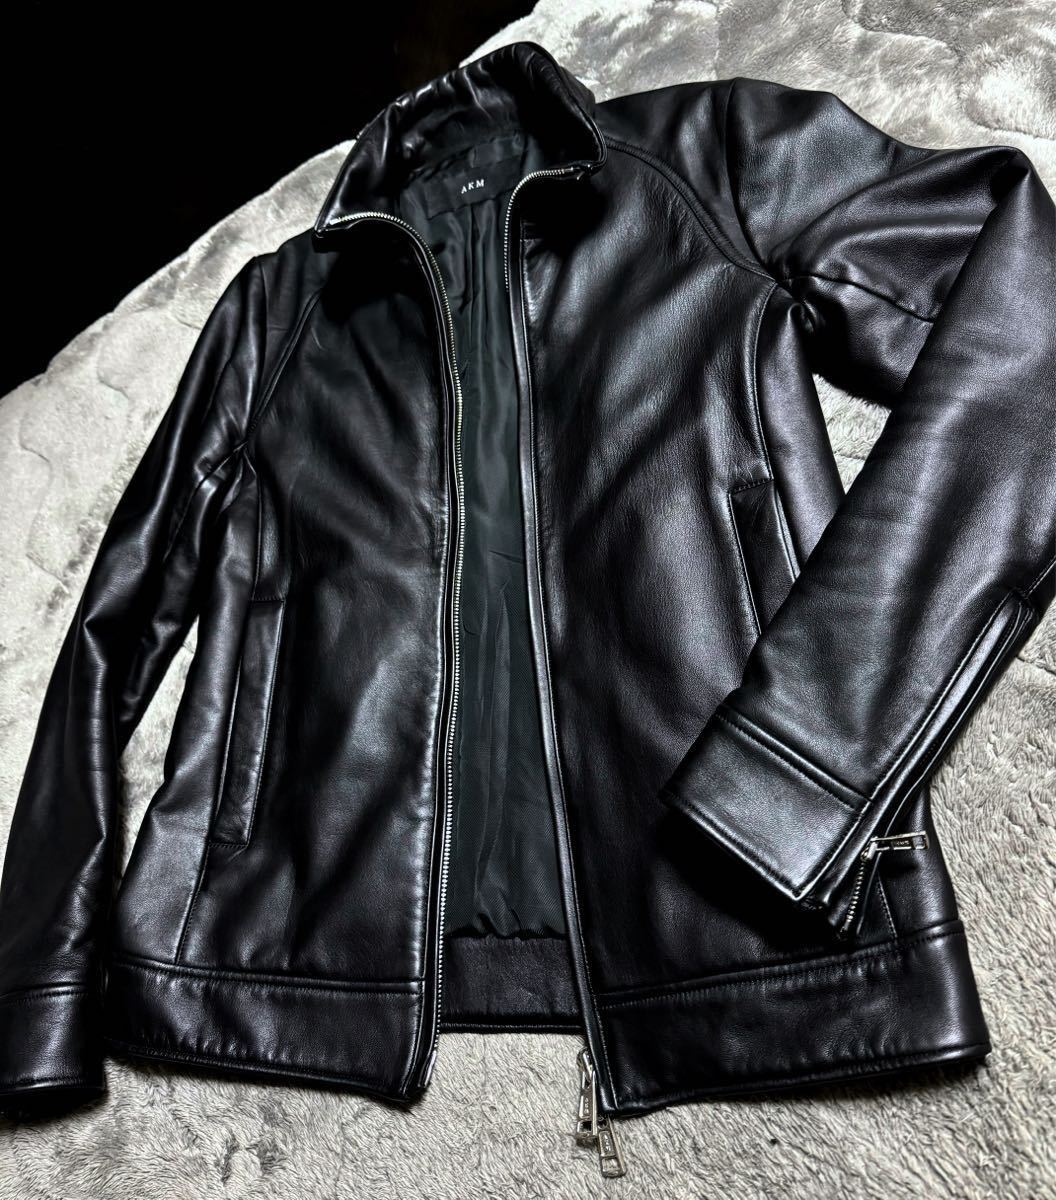  beautiful goods AKM STAND TRACK JACKET stand jersey Single Rider's rider's jacket leather jacket ram leather SENA